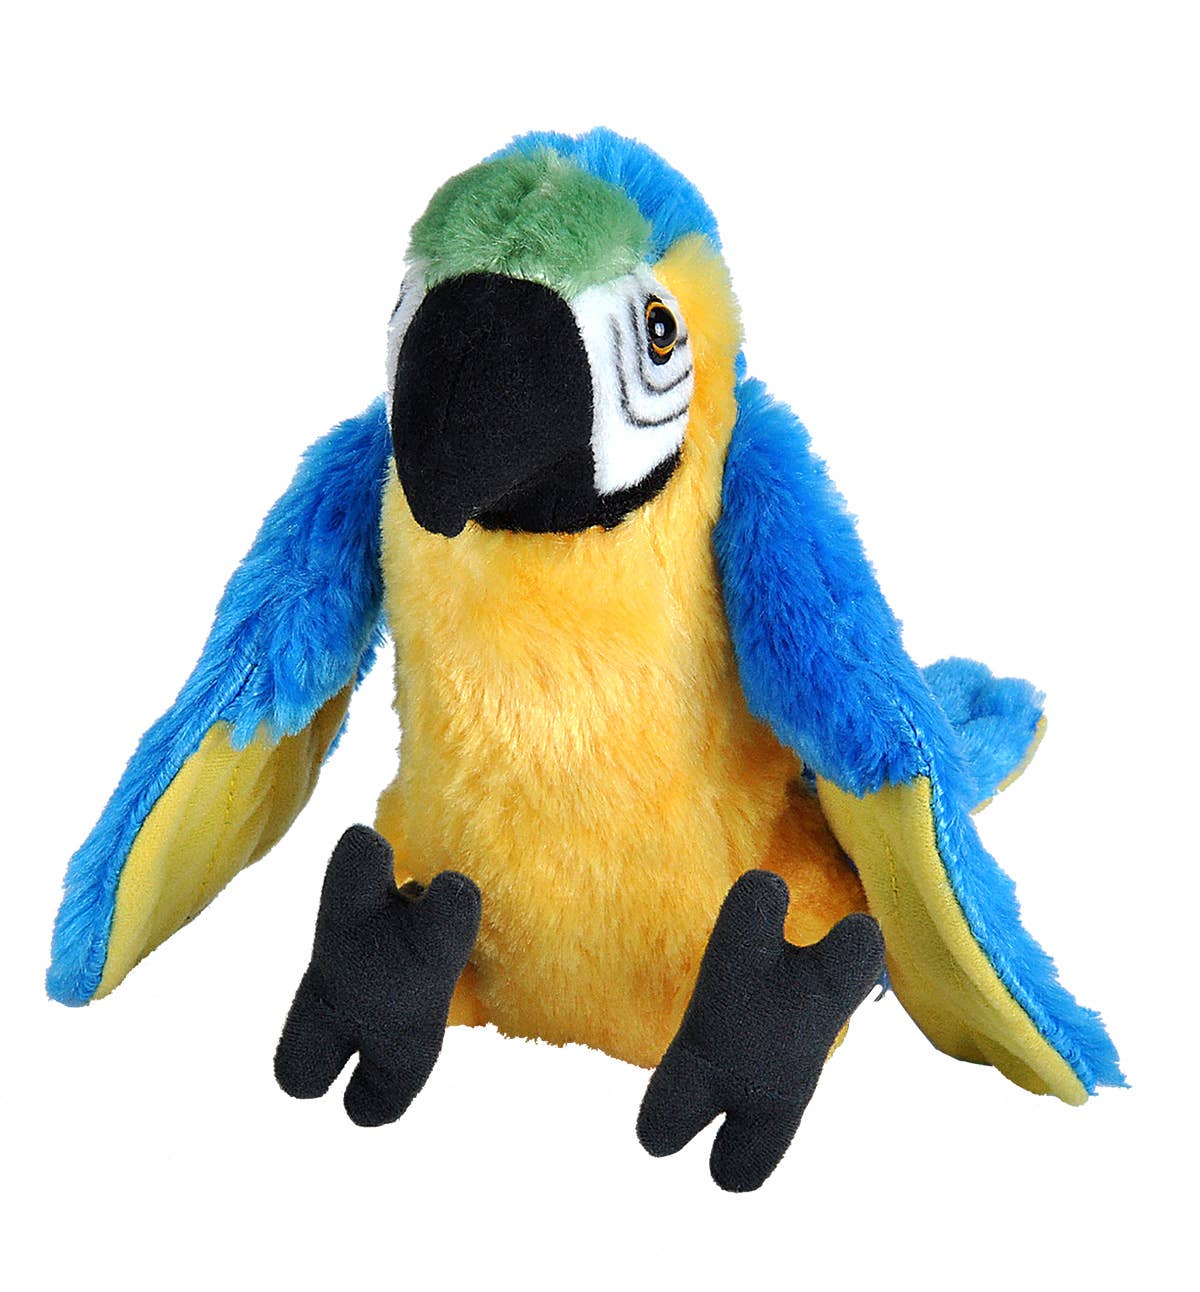 Macaw Parrot Stuffed Animal - 8"